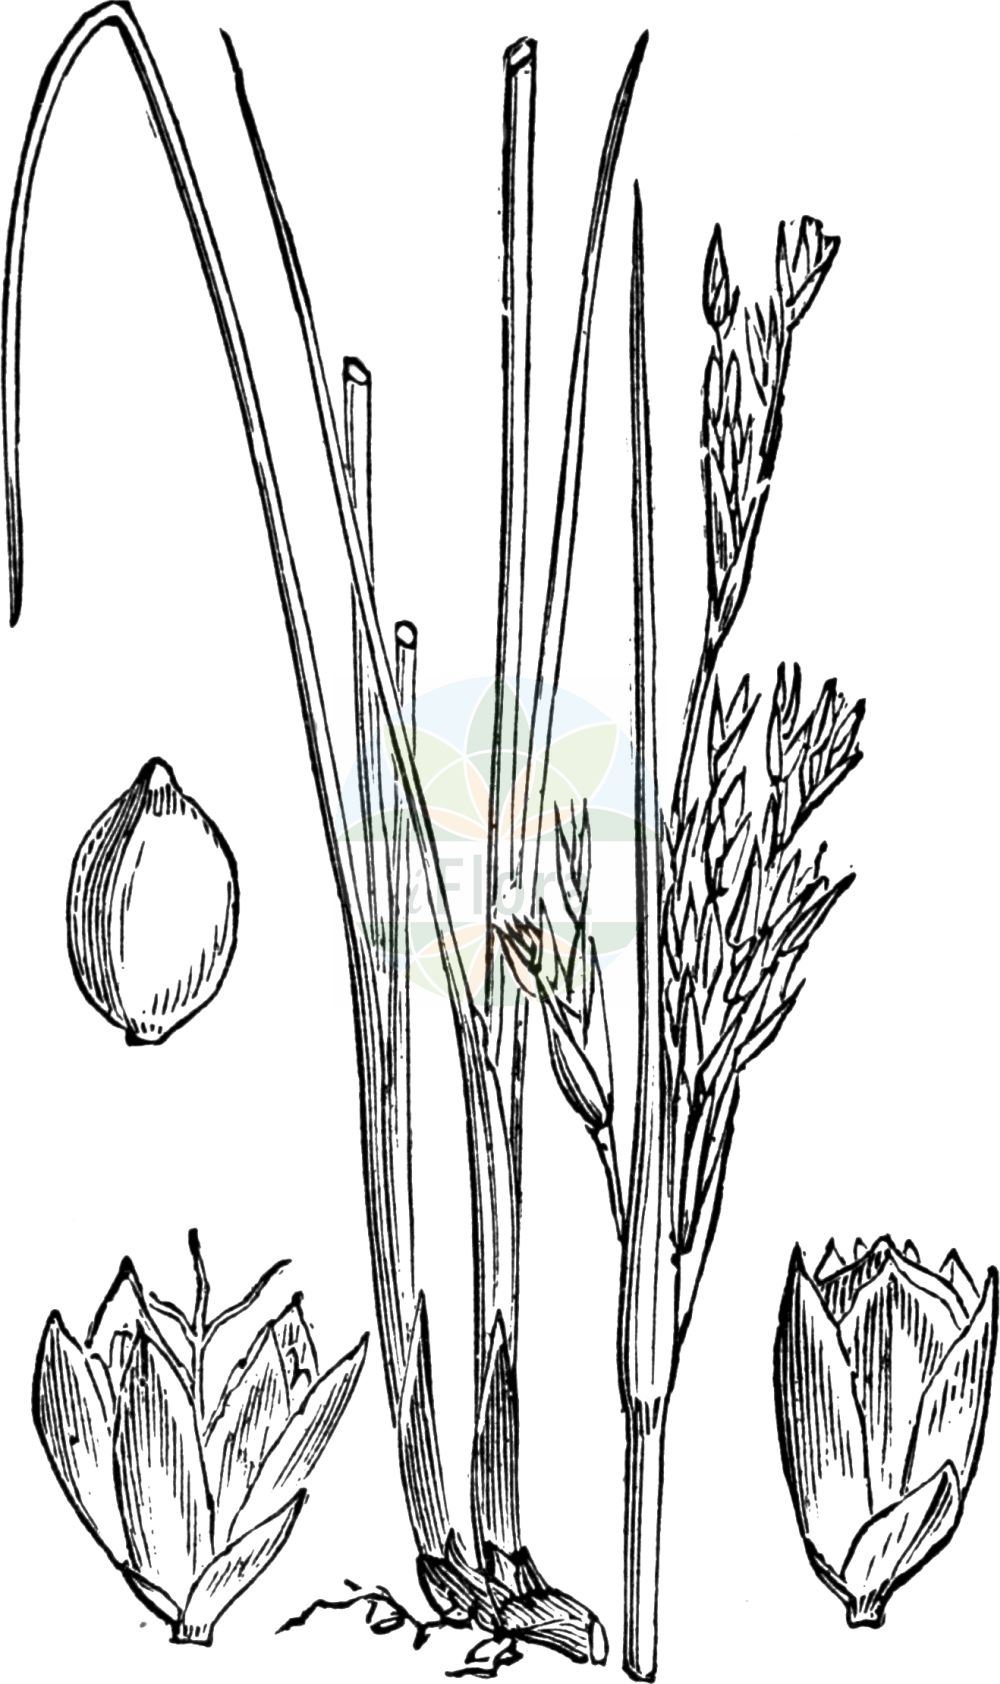 Historische Abbildung von Juncus maritimus (Meerstrand-Binse - Sea Rush). Das Bild zeigt Blatt, Bluete, Frucht und Same. ---- Historical Drawing of Juncus maritimus (Meerstrand-Binse - Sea Rush). The image is showing leaf, flower, fruit and seed.(Juncus maritimus,Meerstrand-Binse,Sea Rush,Juncus broteroi,Juncus maritimus,Juncus paui,Juncus ponticus,Juncus pseudacutus,Juncus spinosus var. congestus,Meerstrand-Binse,Strand-Simse,Sea Rush,Juncus,Binse,Rush,Juncaceae,Binsengewächse,Rush family,Blatt,Bluete,Frucht,Same,leaf,flower,fruit,seed,Fitch et al. (1880))